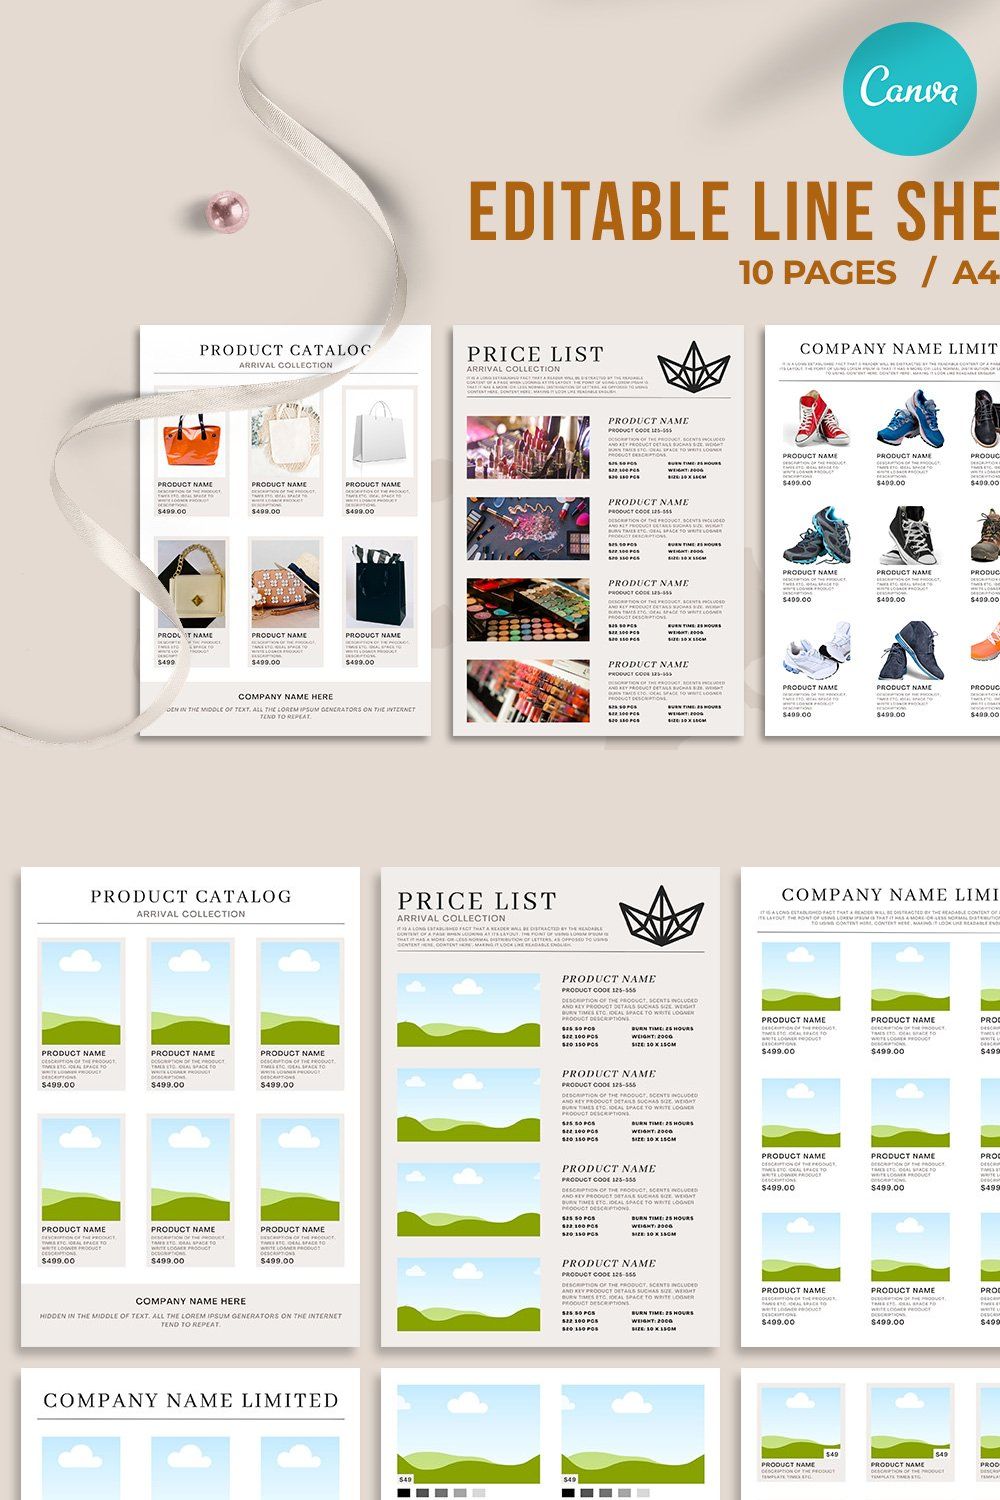 Wholesale Product Catalog/Line Sheet pinterest preview image.